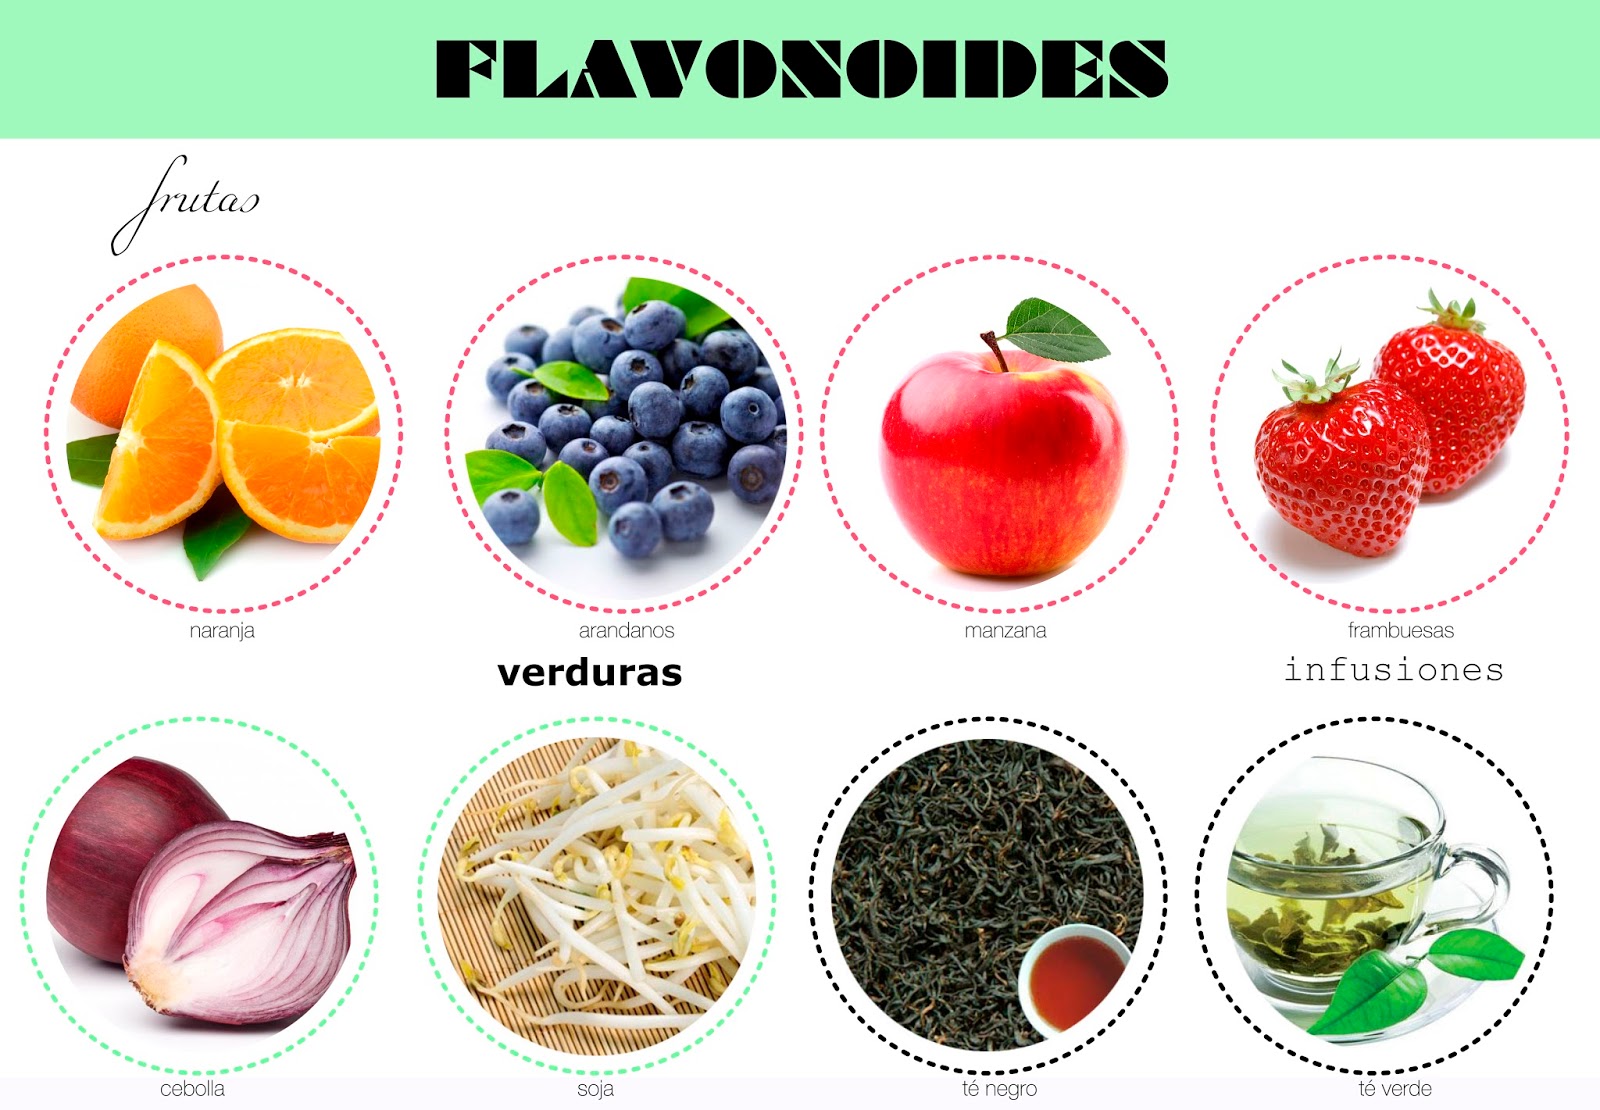 Flavonoides